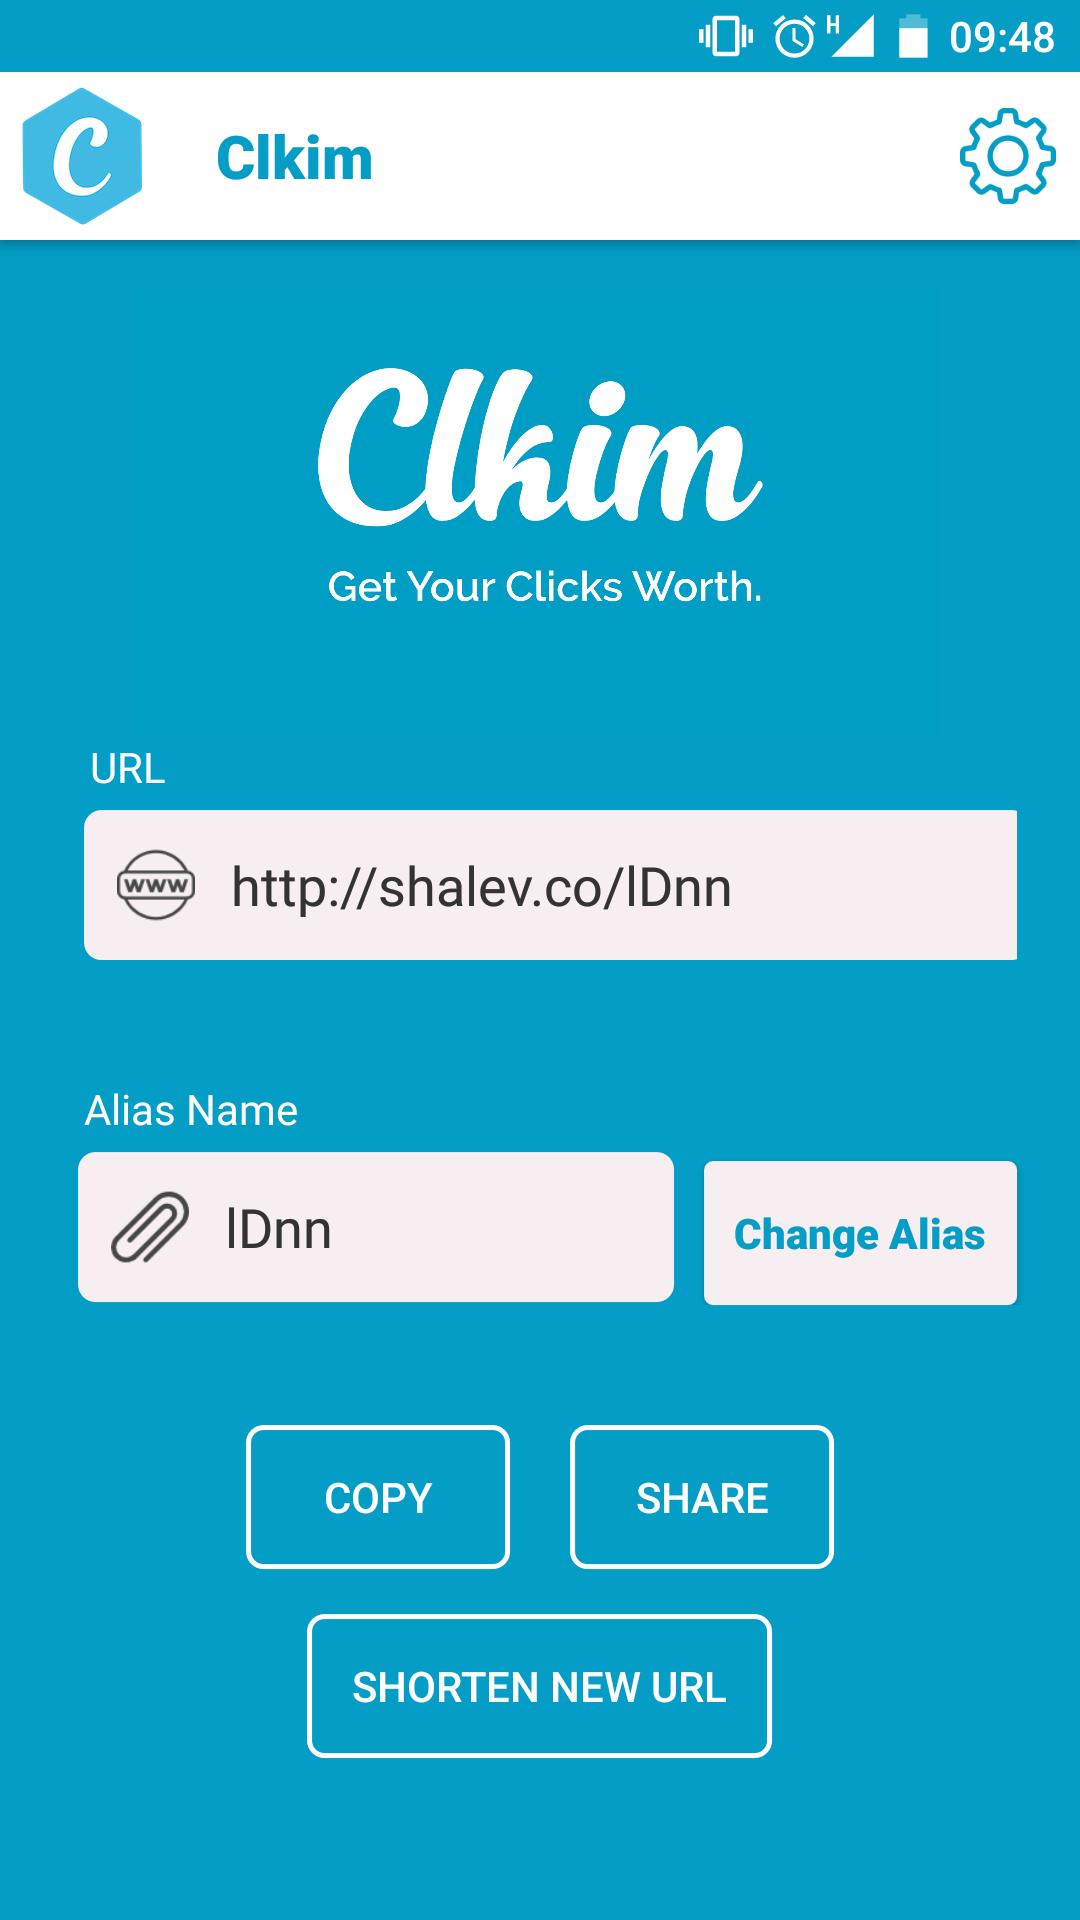 Clkim change alias